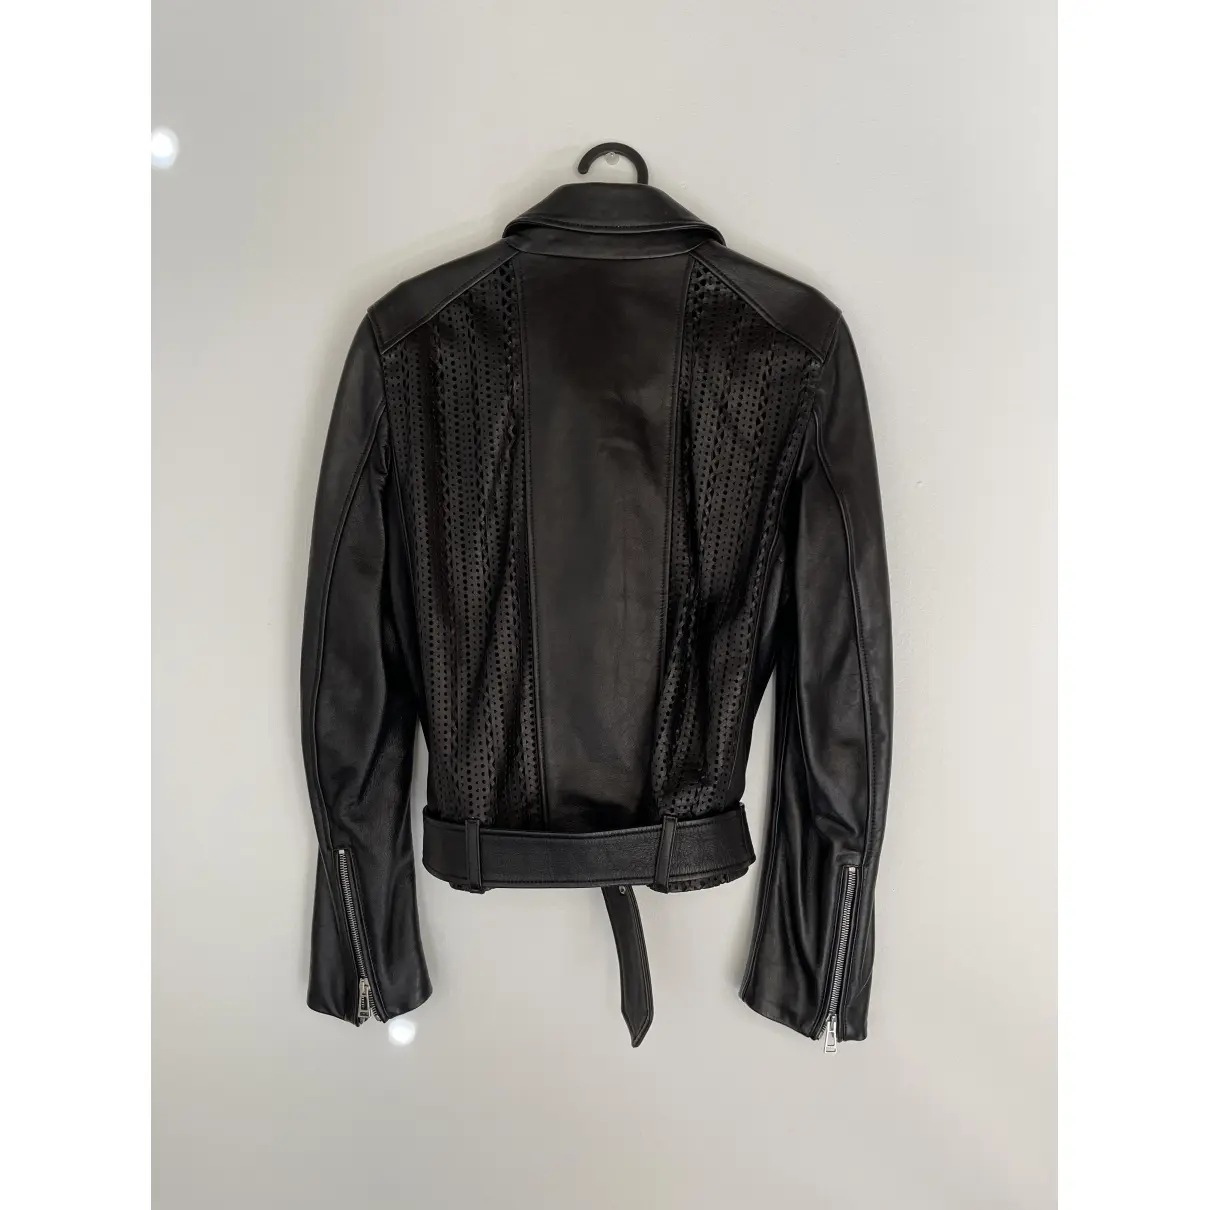 Buy Belstaff Leather biker jacket online